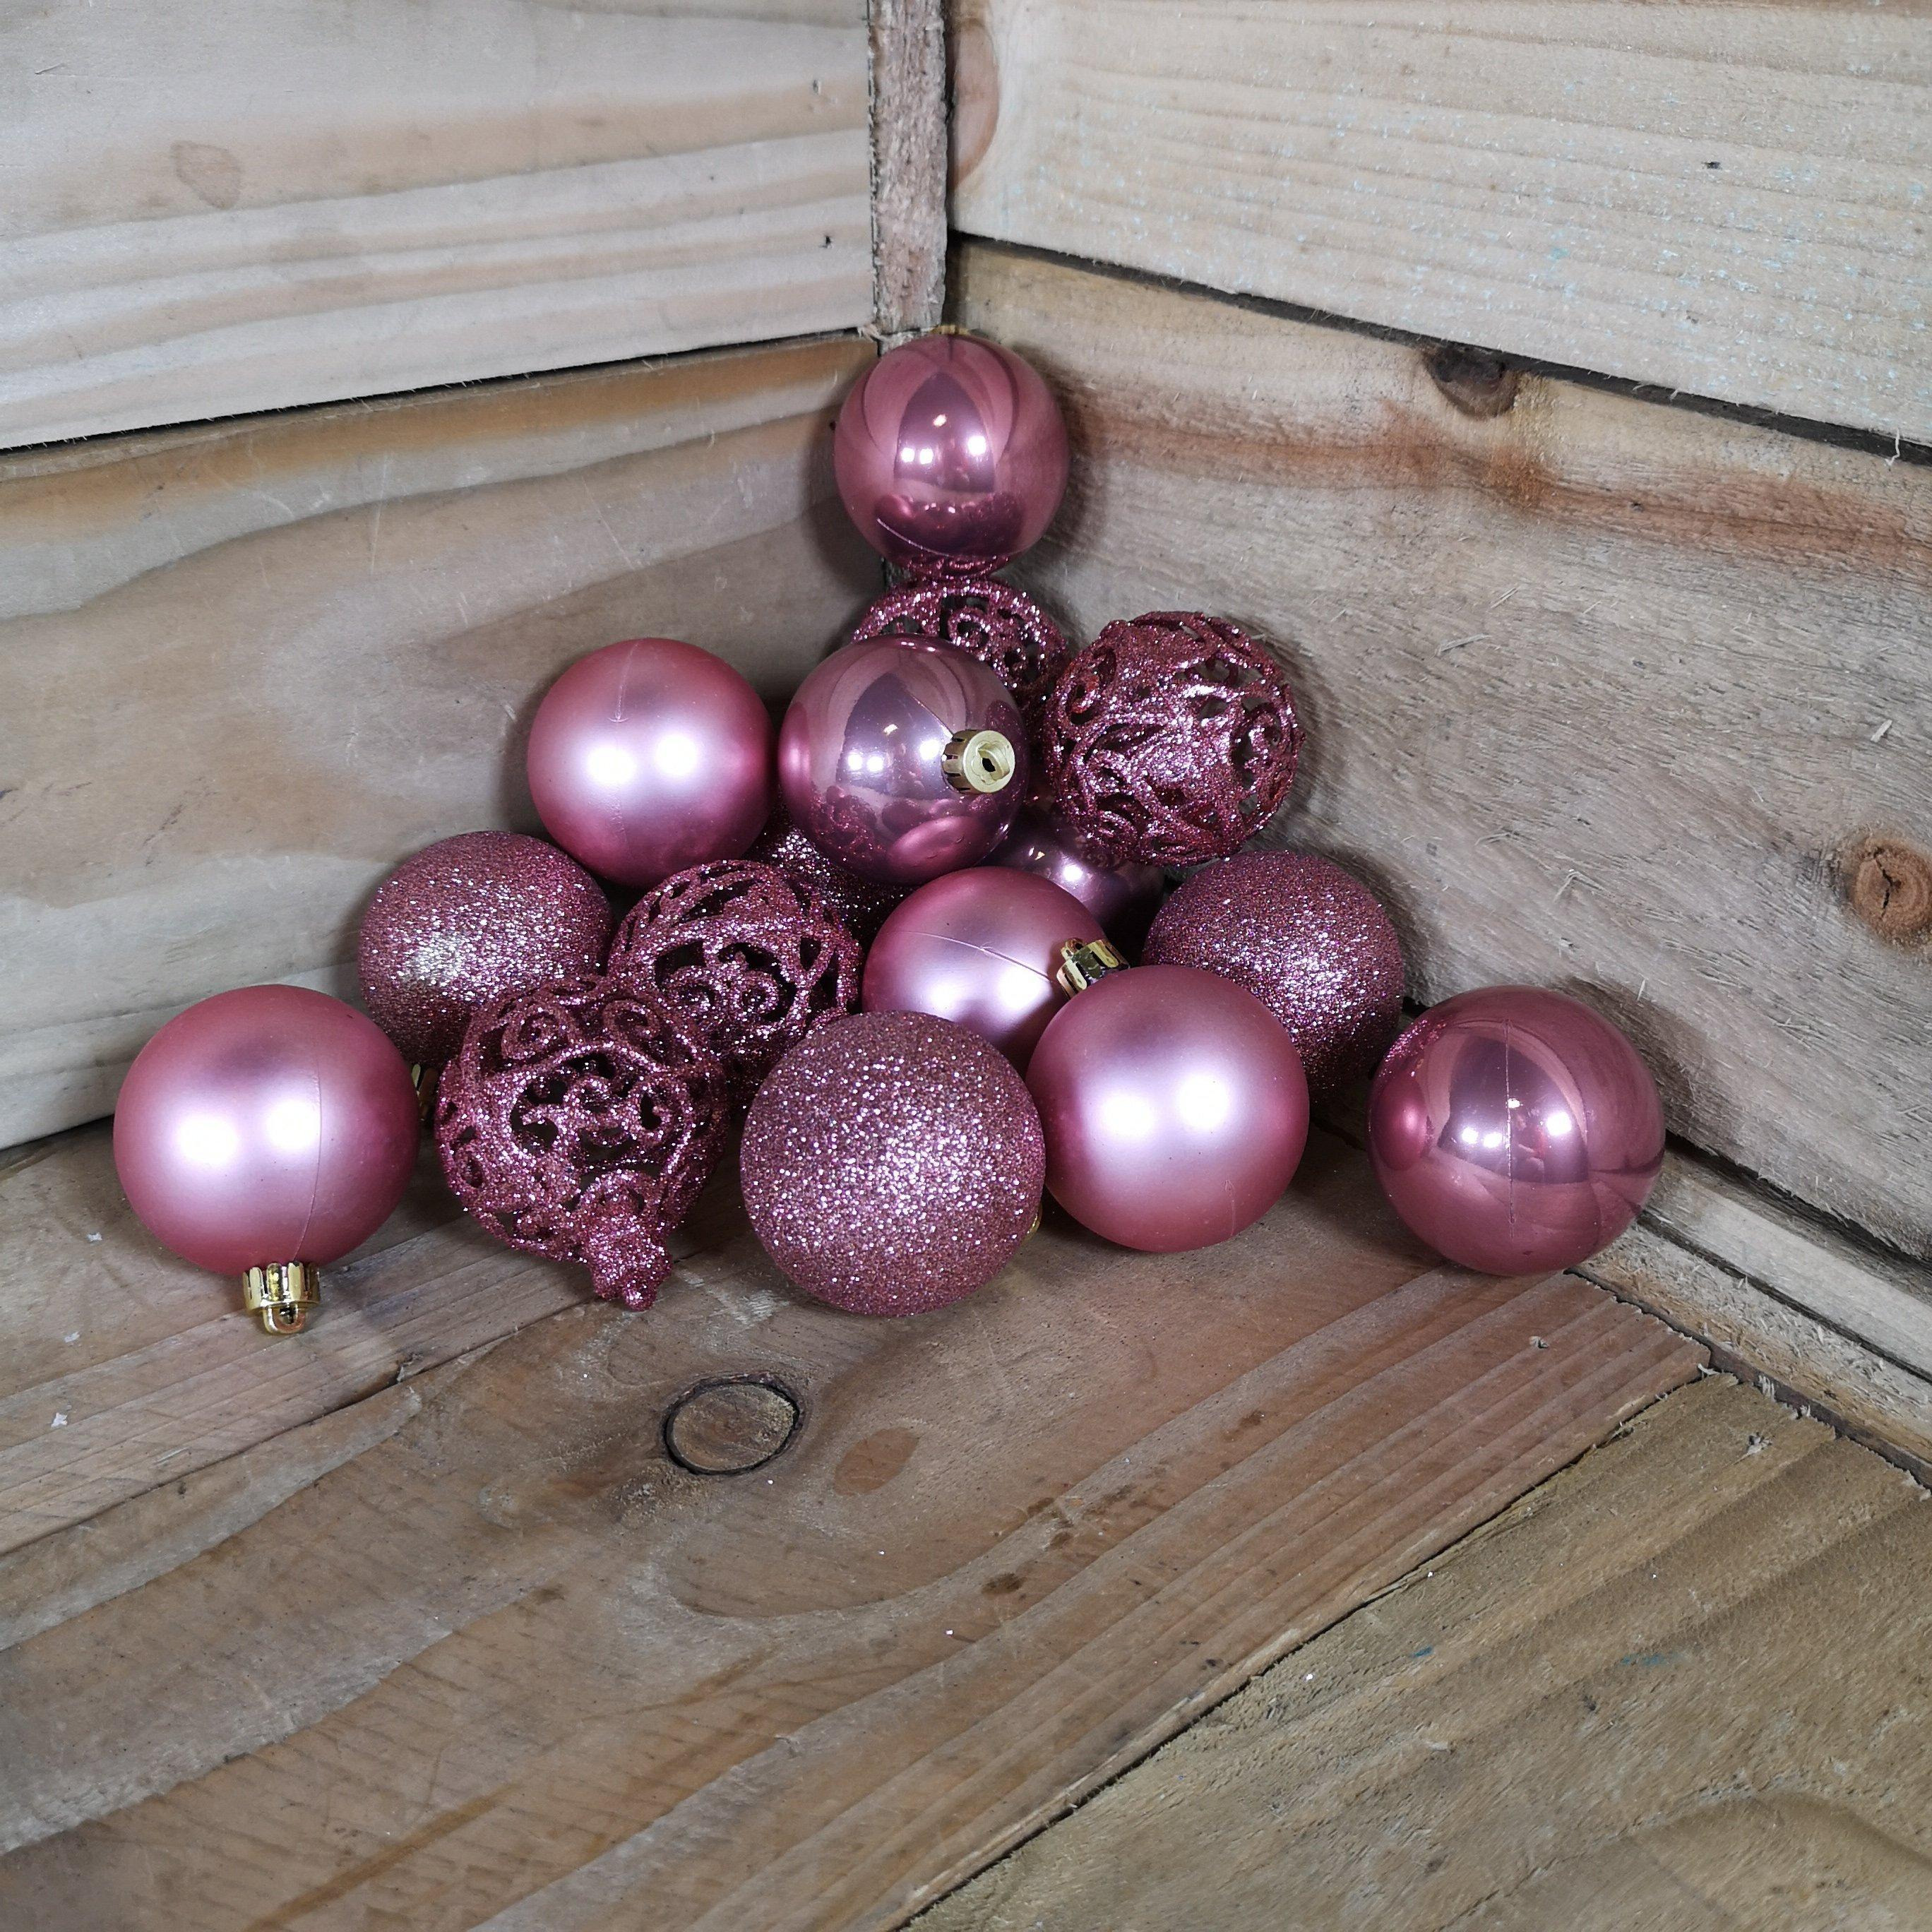 16pcs 6cm Assorted Shatterproof Baubles Christmas Decoration in Rose Pink - image 1